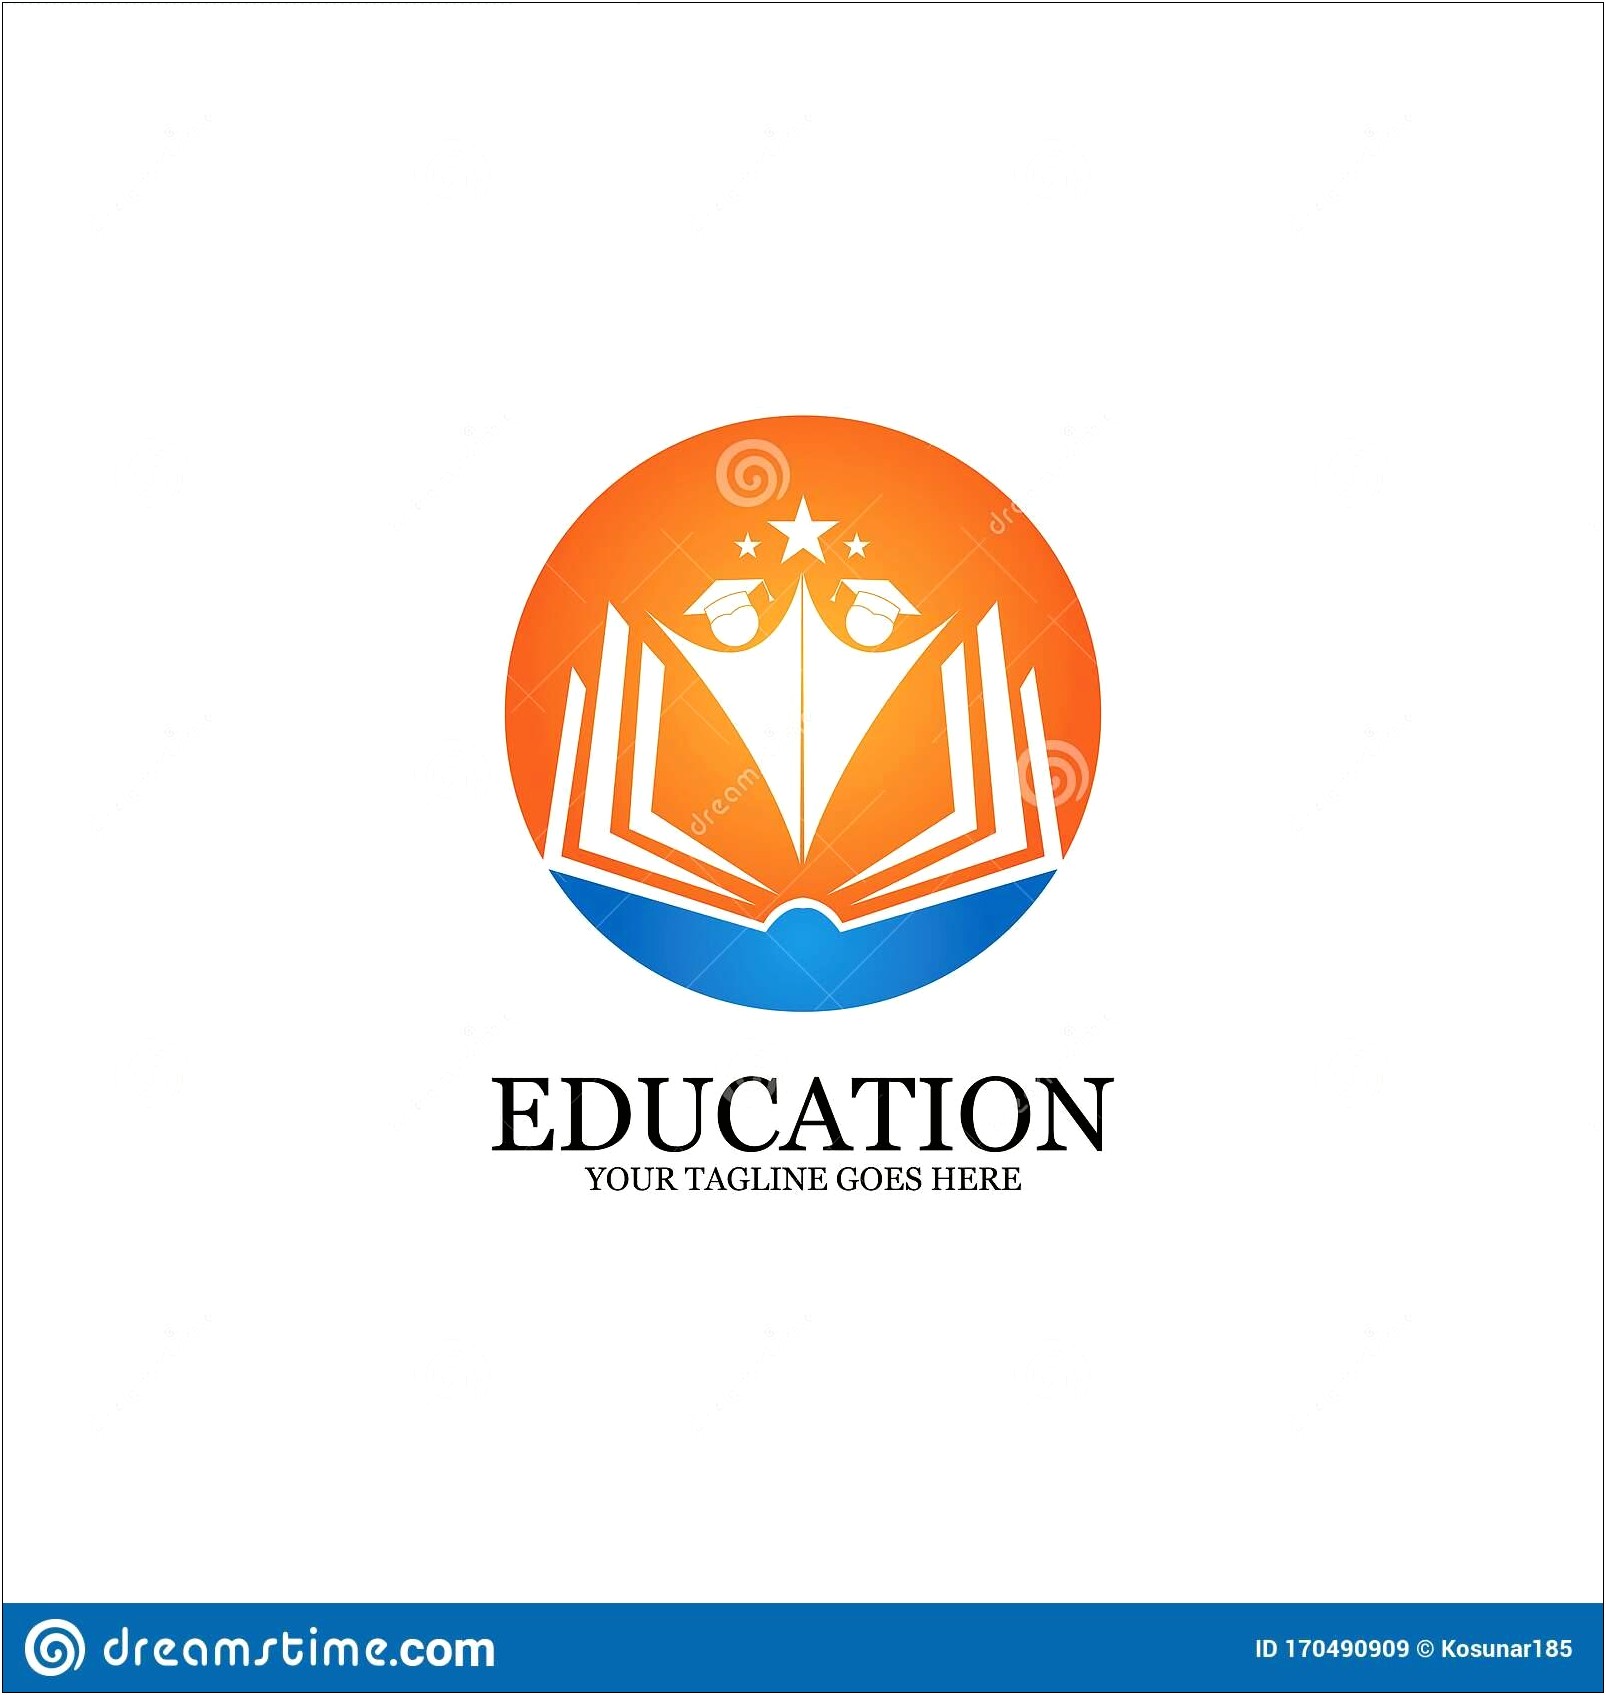 Illustrator Education Logo Templates Free Download